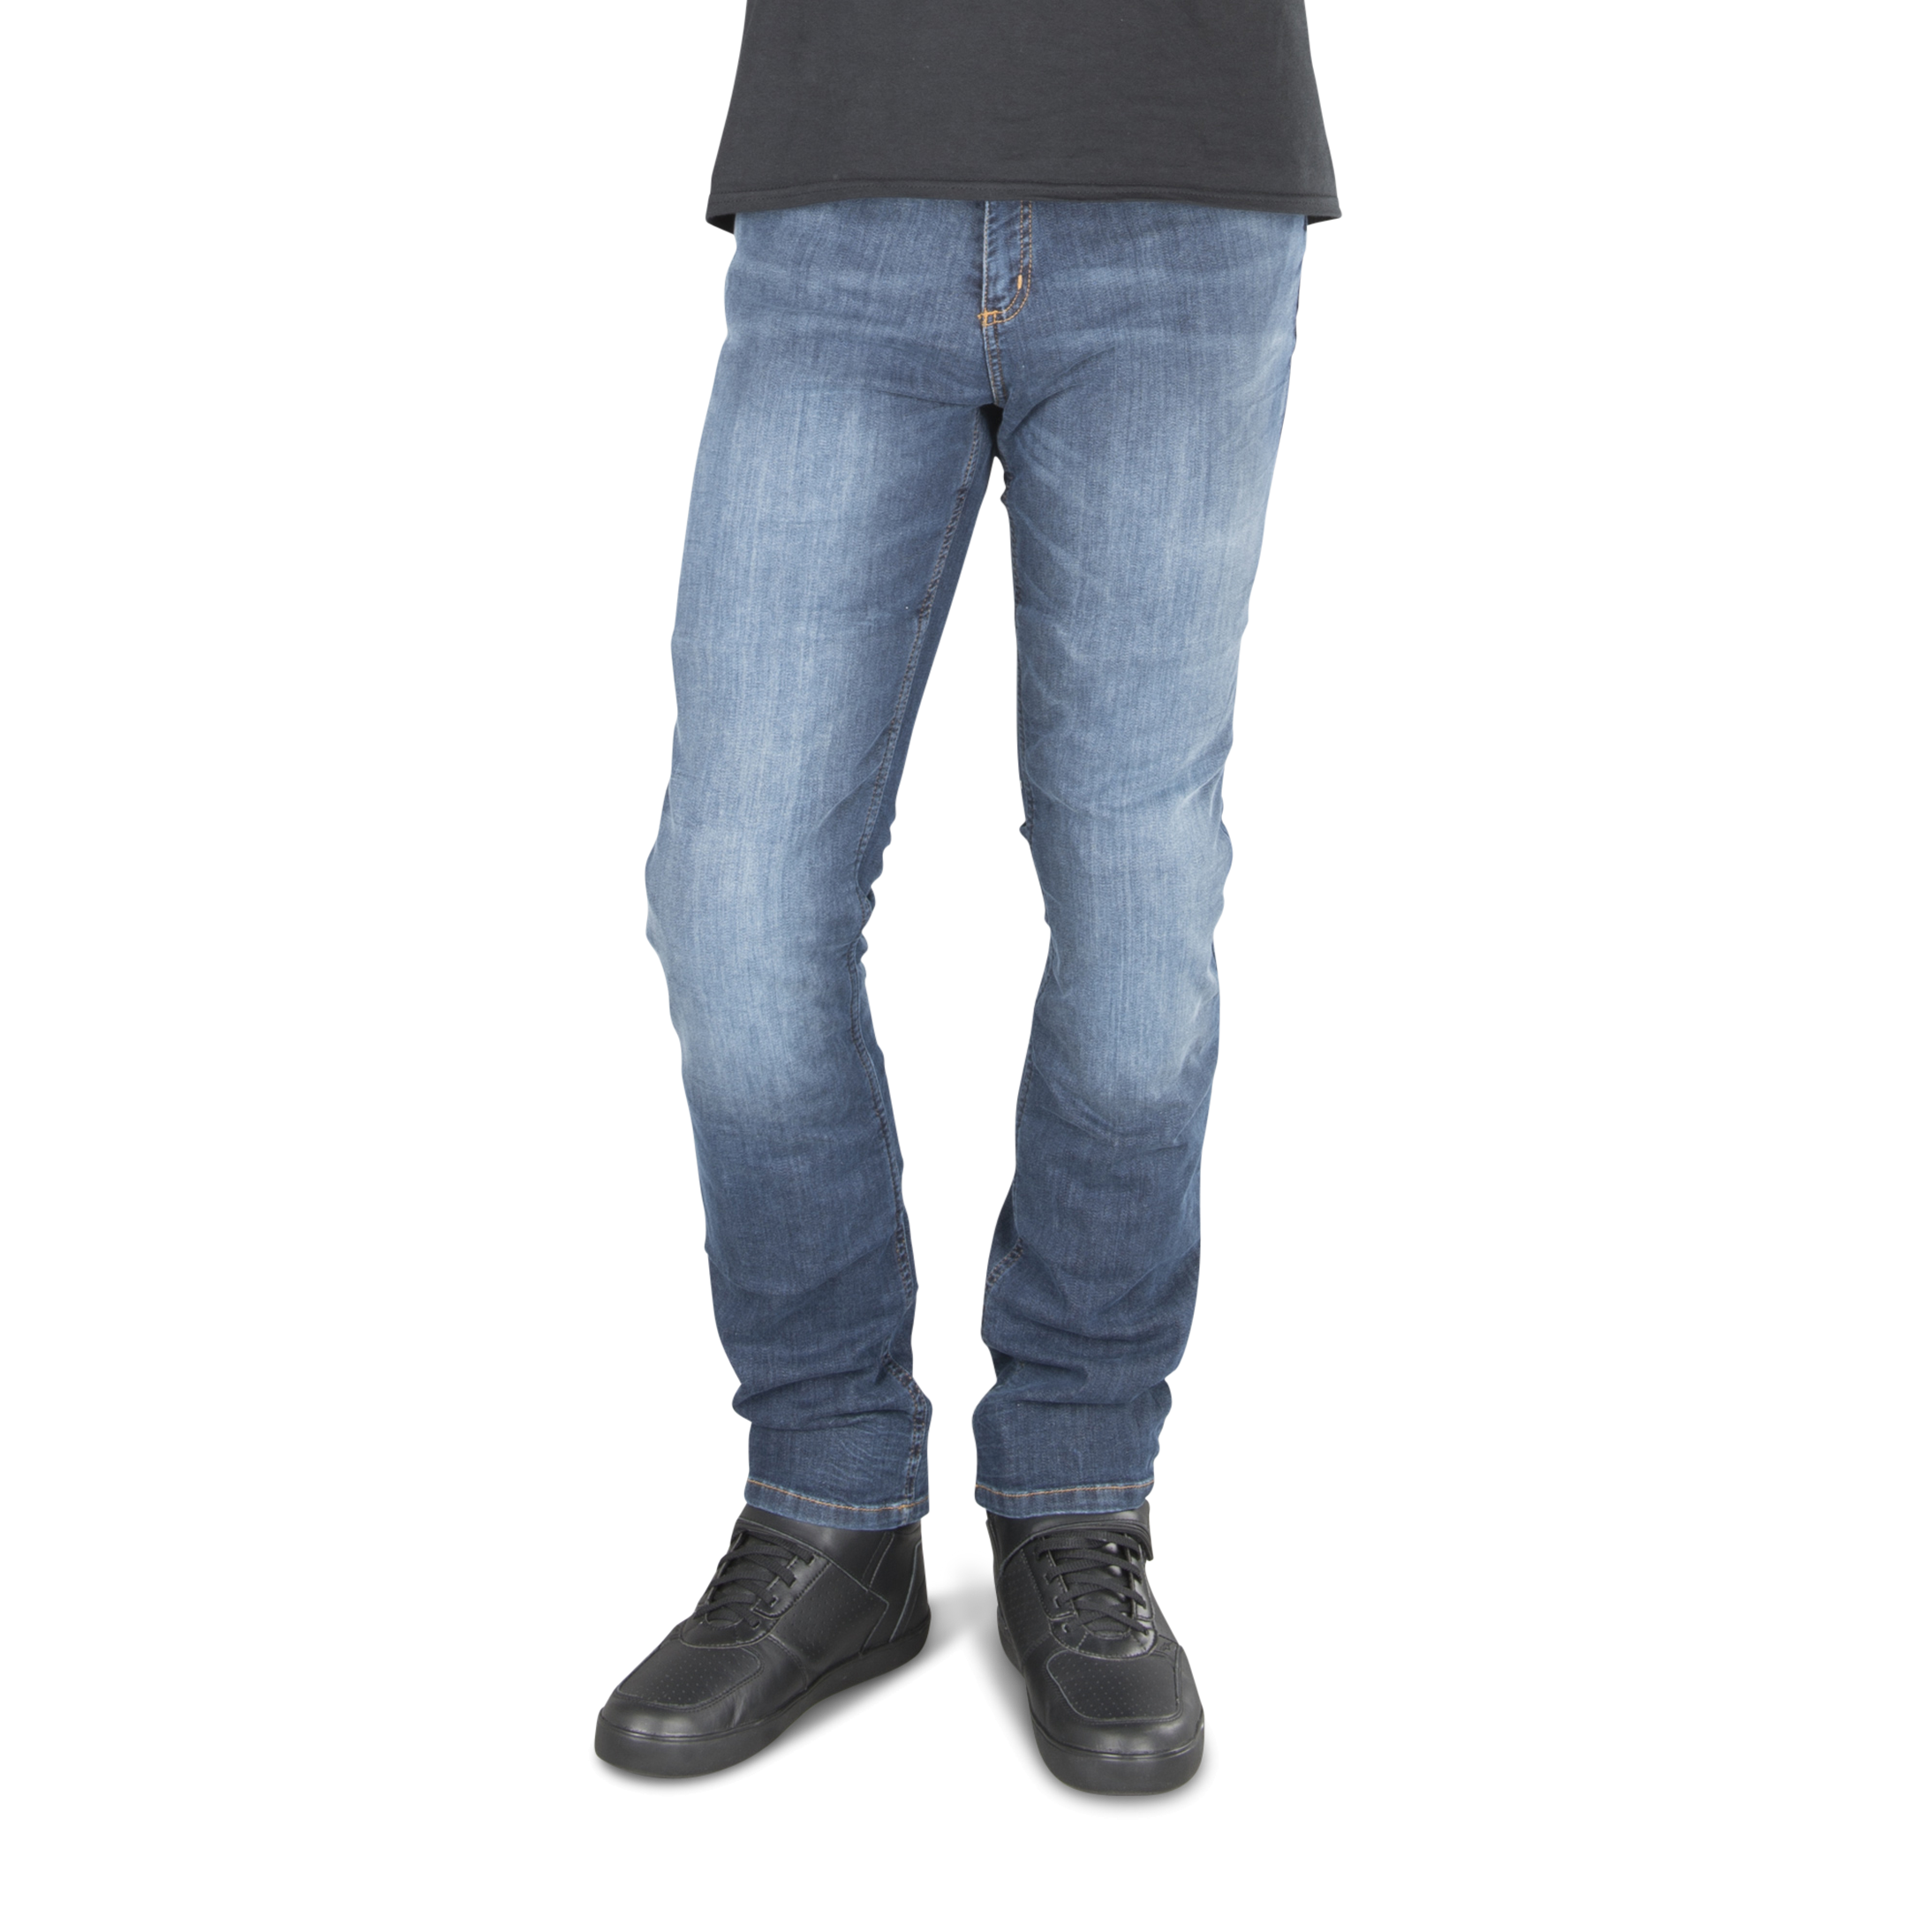 mc kevlar jeans